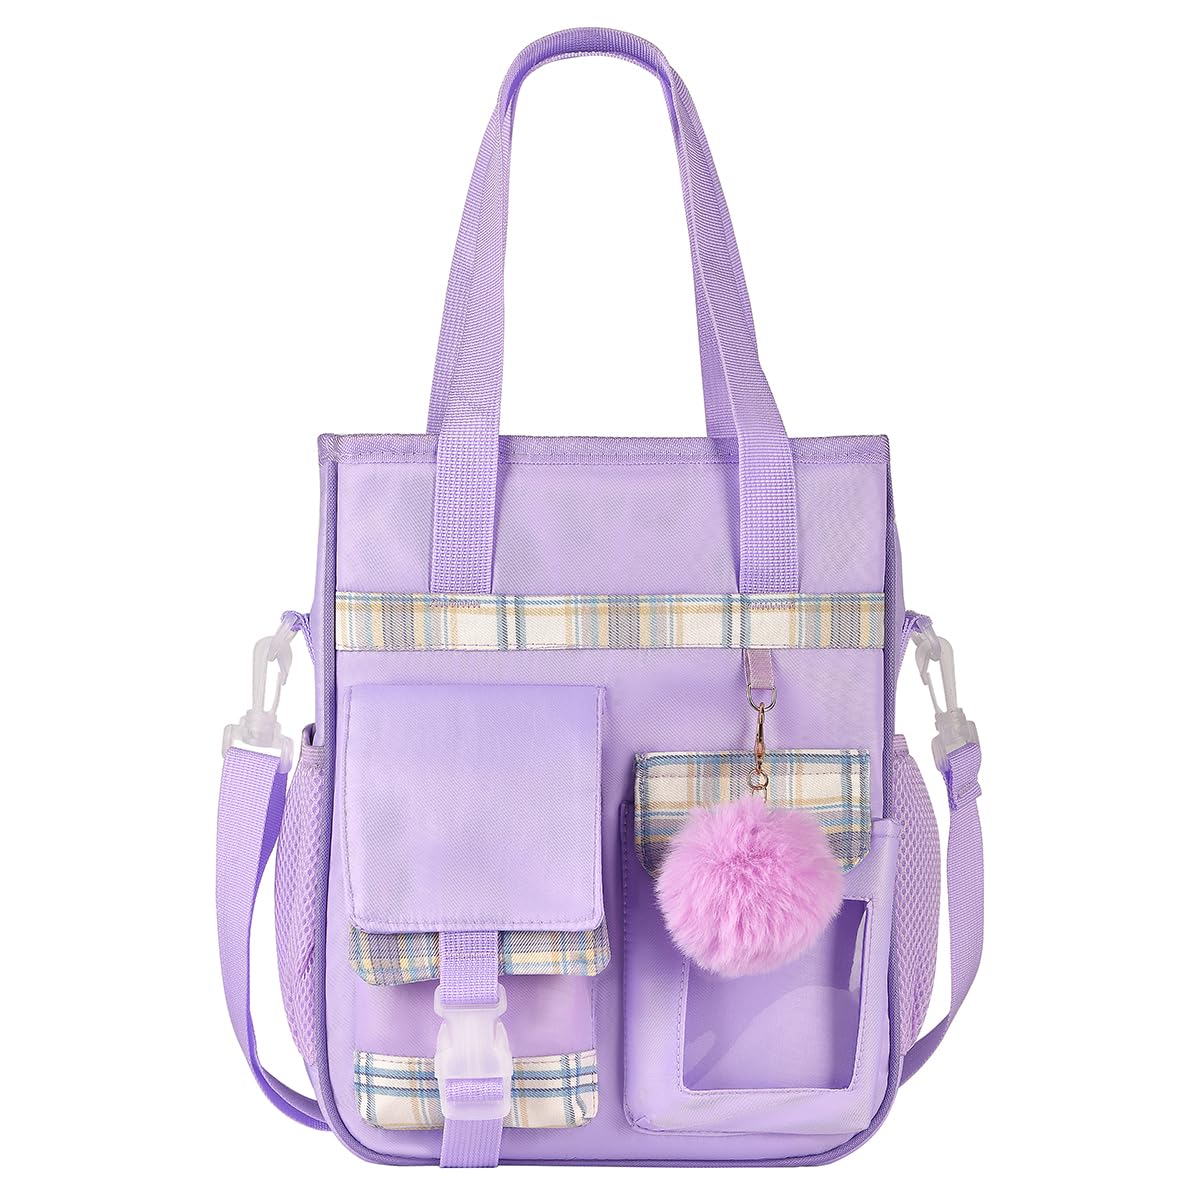 kebeixuan girls tote bag school cute casual handbag